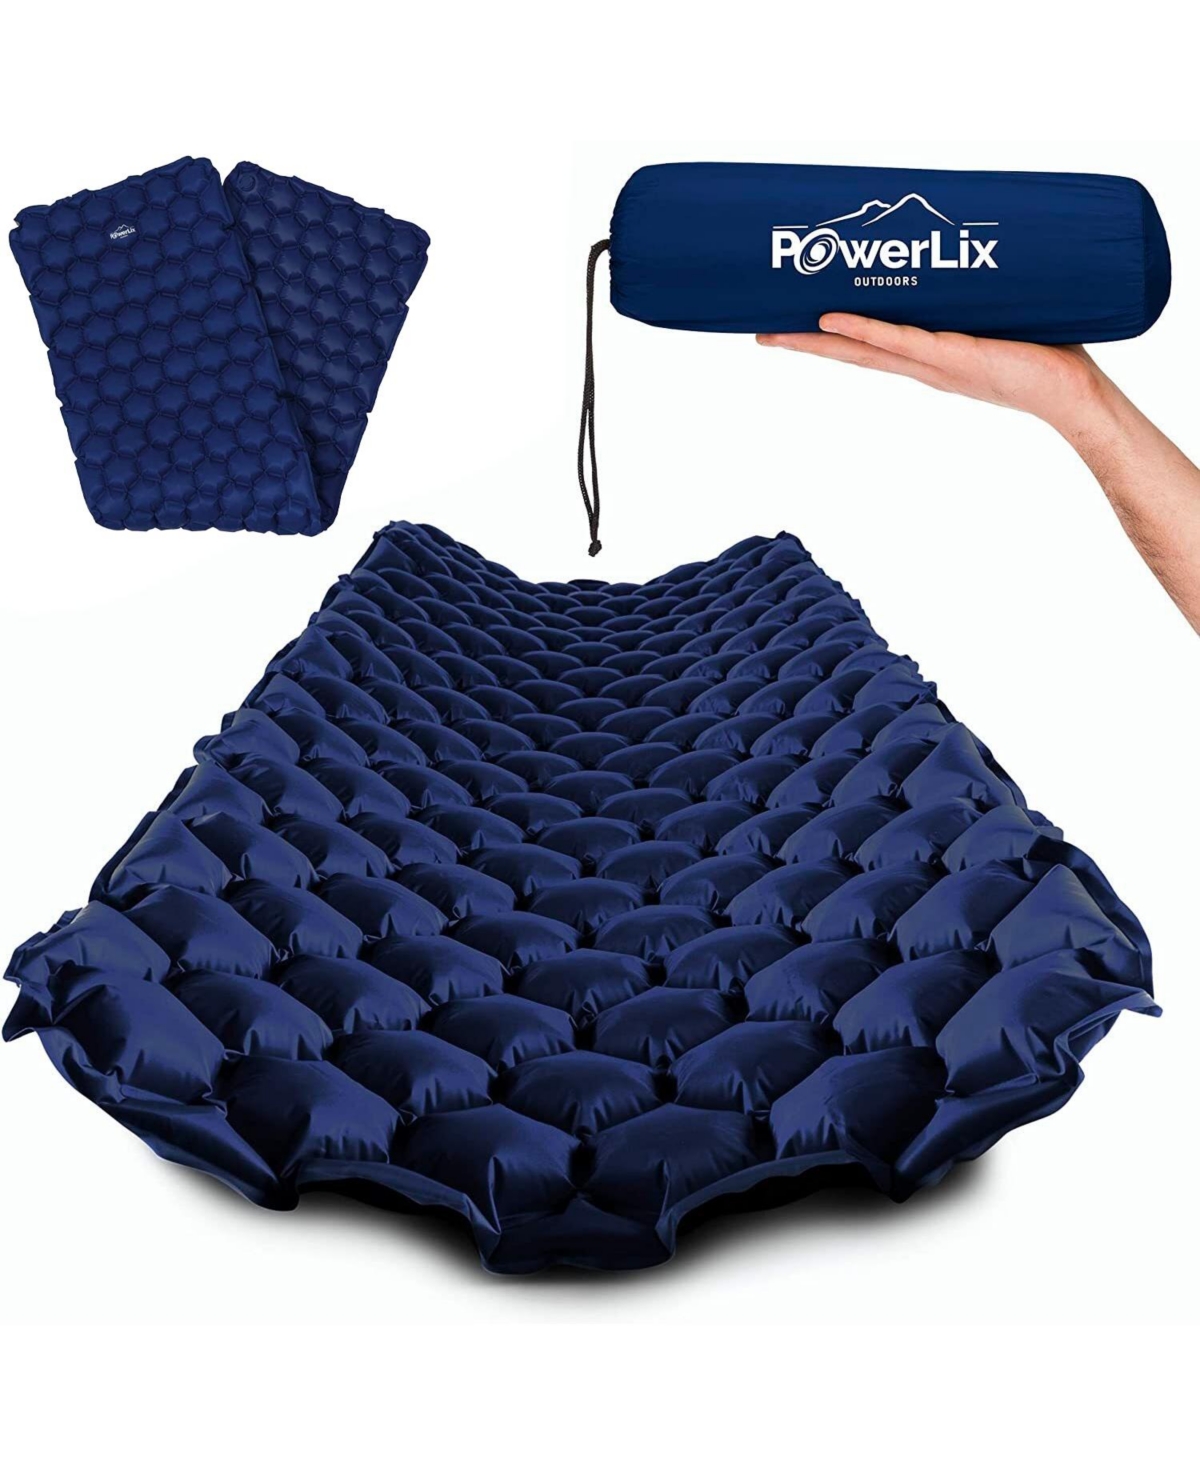 Sleeping Pad - Ultralight Inflatable Sleeping Mat, For Camping, Backpacking, Hiking - Navy